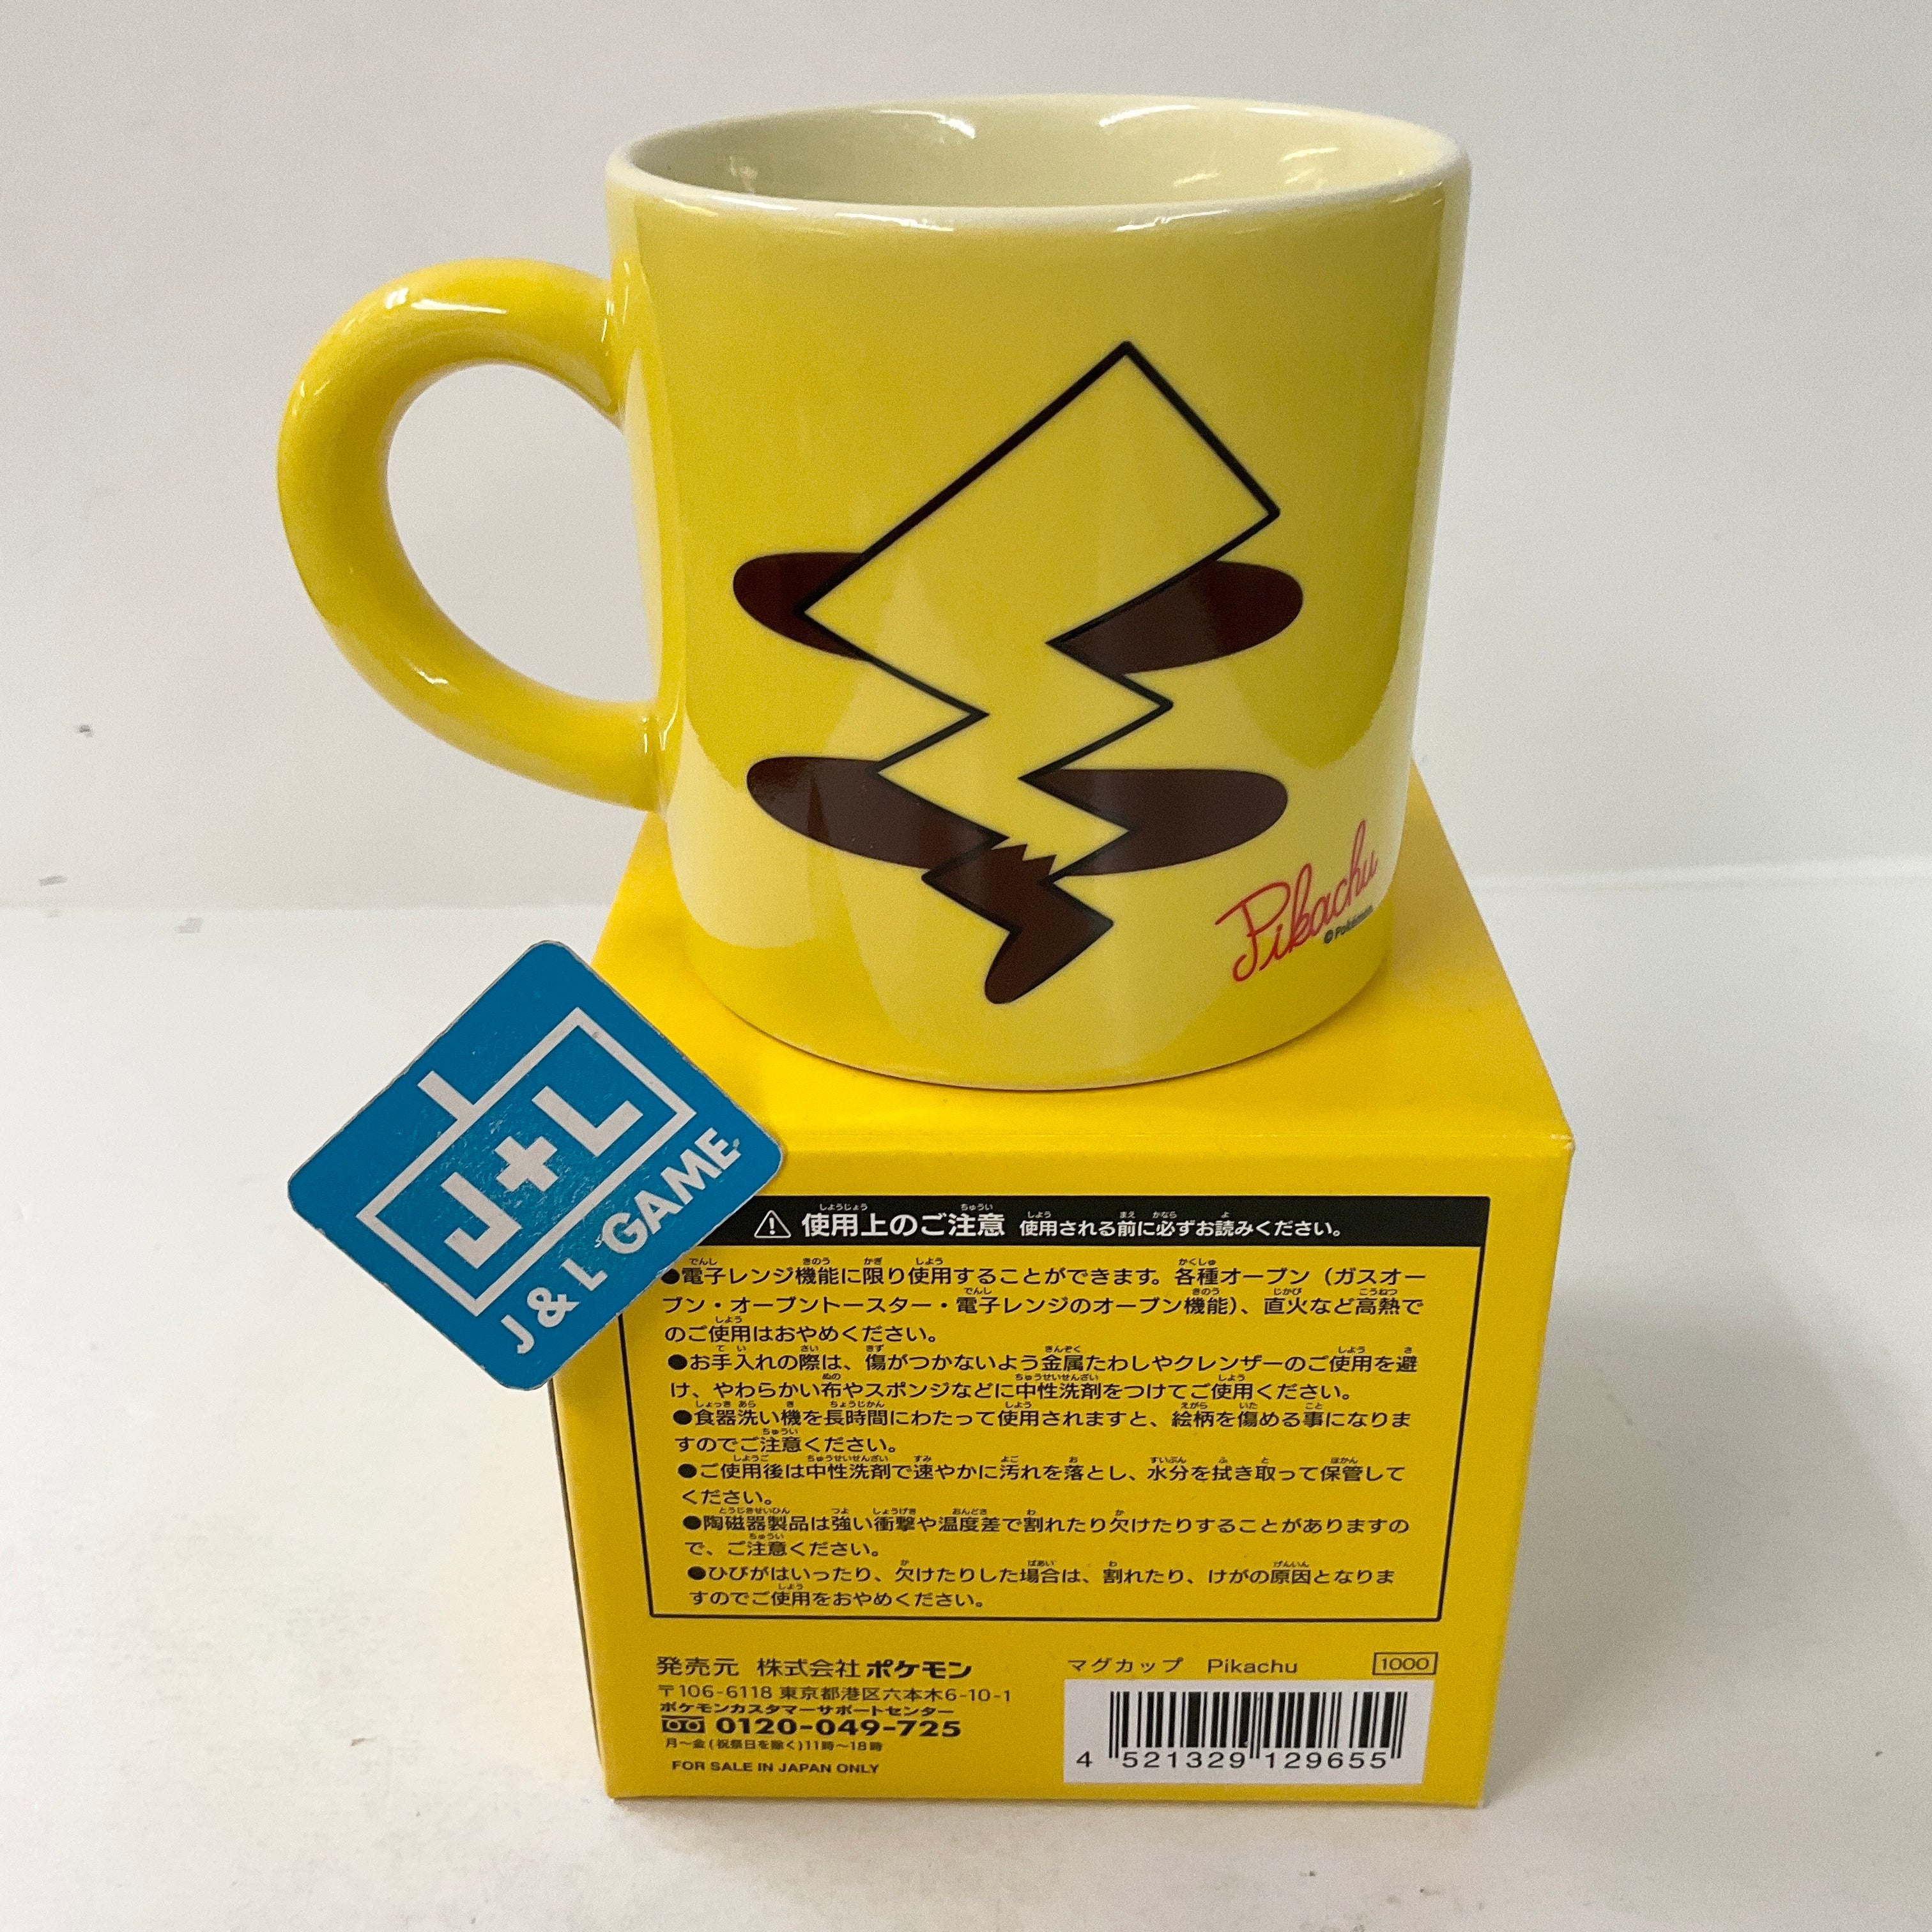 Pokemon Center Pikachu Mug - Toy (Japanese Import) Toy ポケモン(Pokemon)   